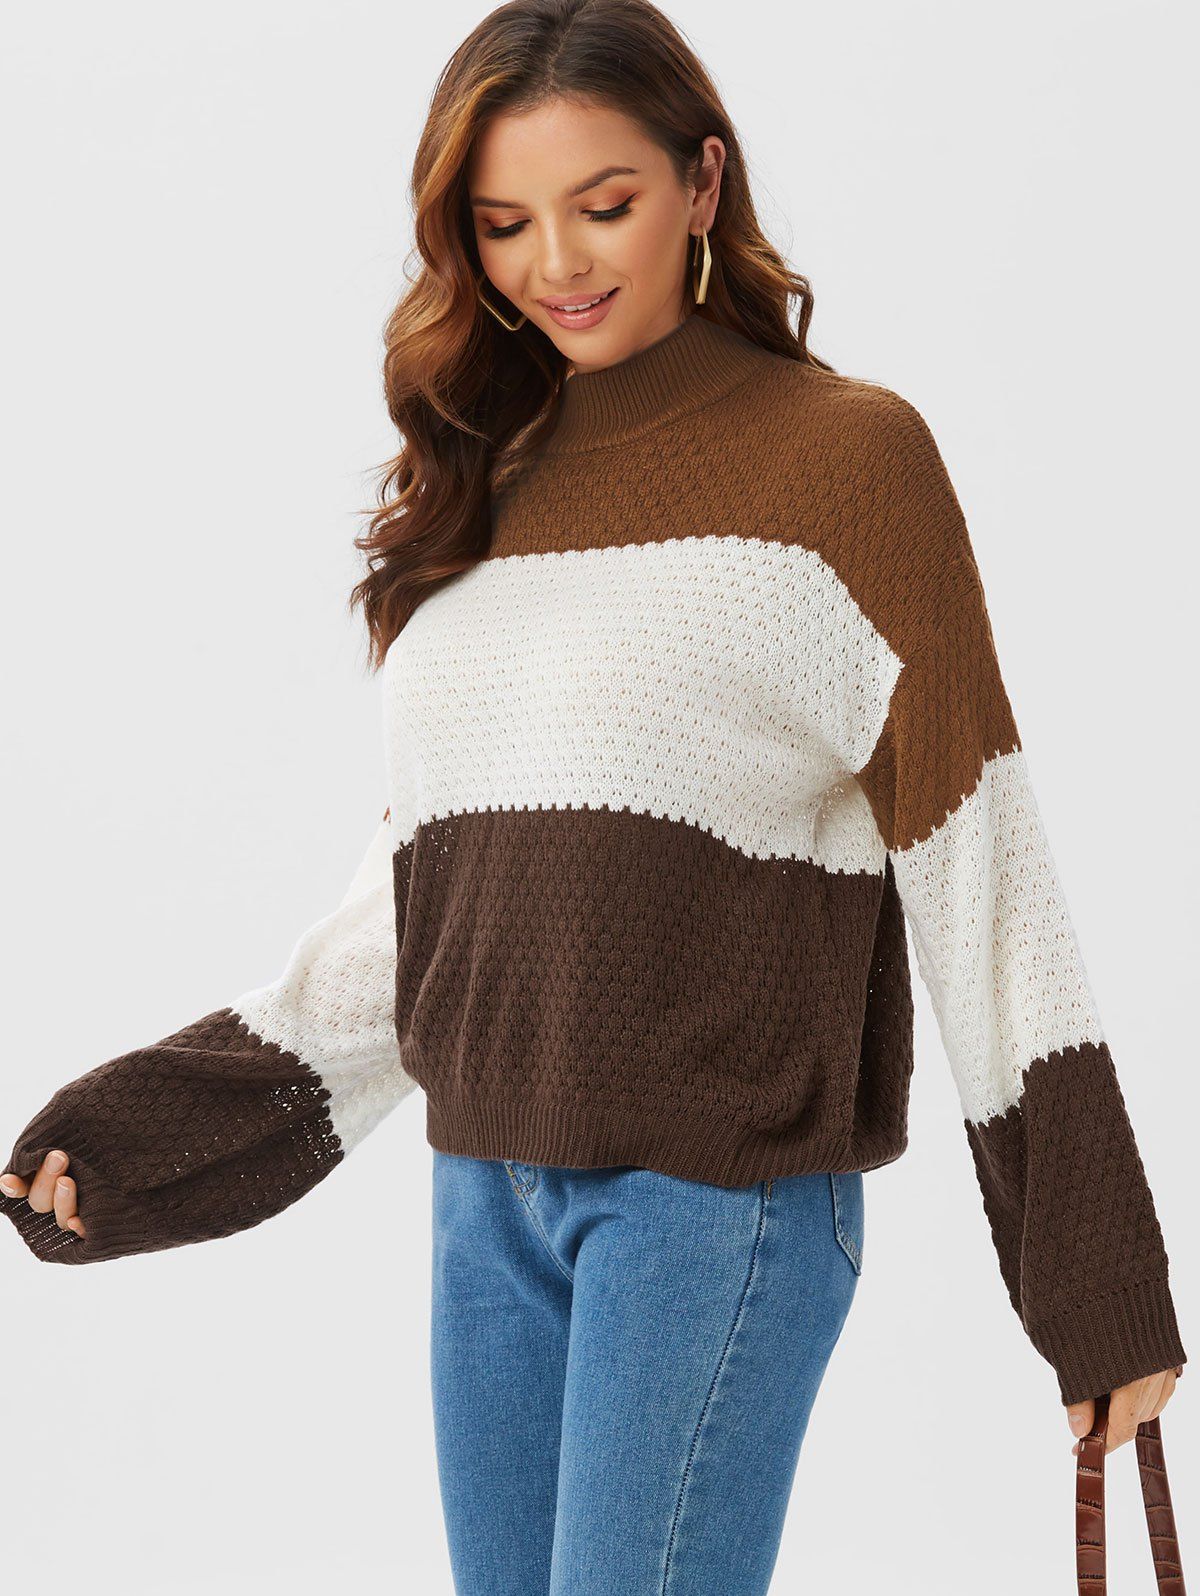 Drop Shoulder Colorblock Sweater - COFFEE S